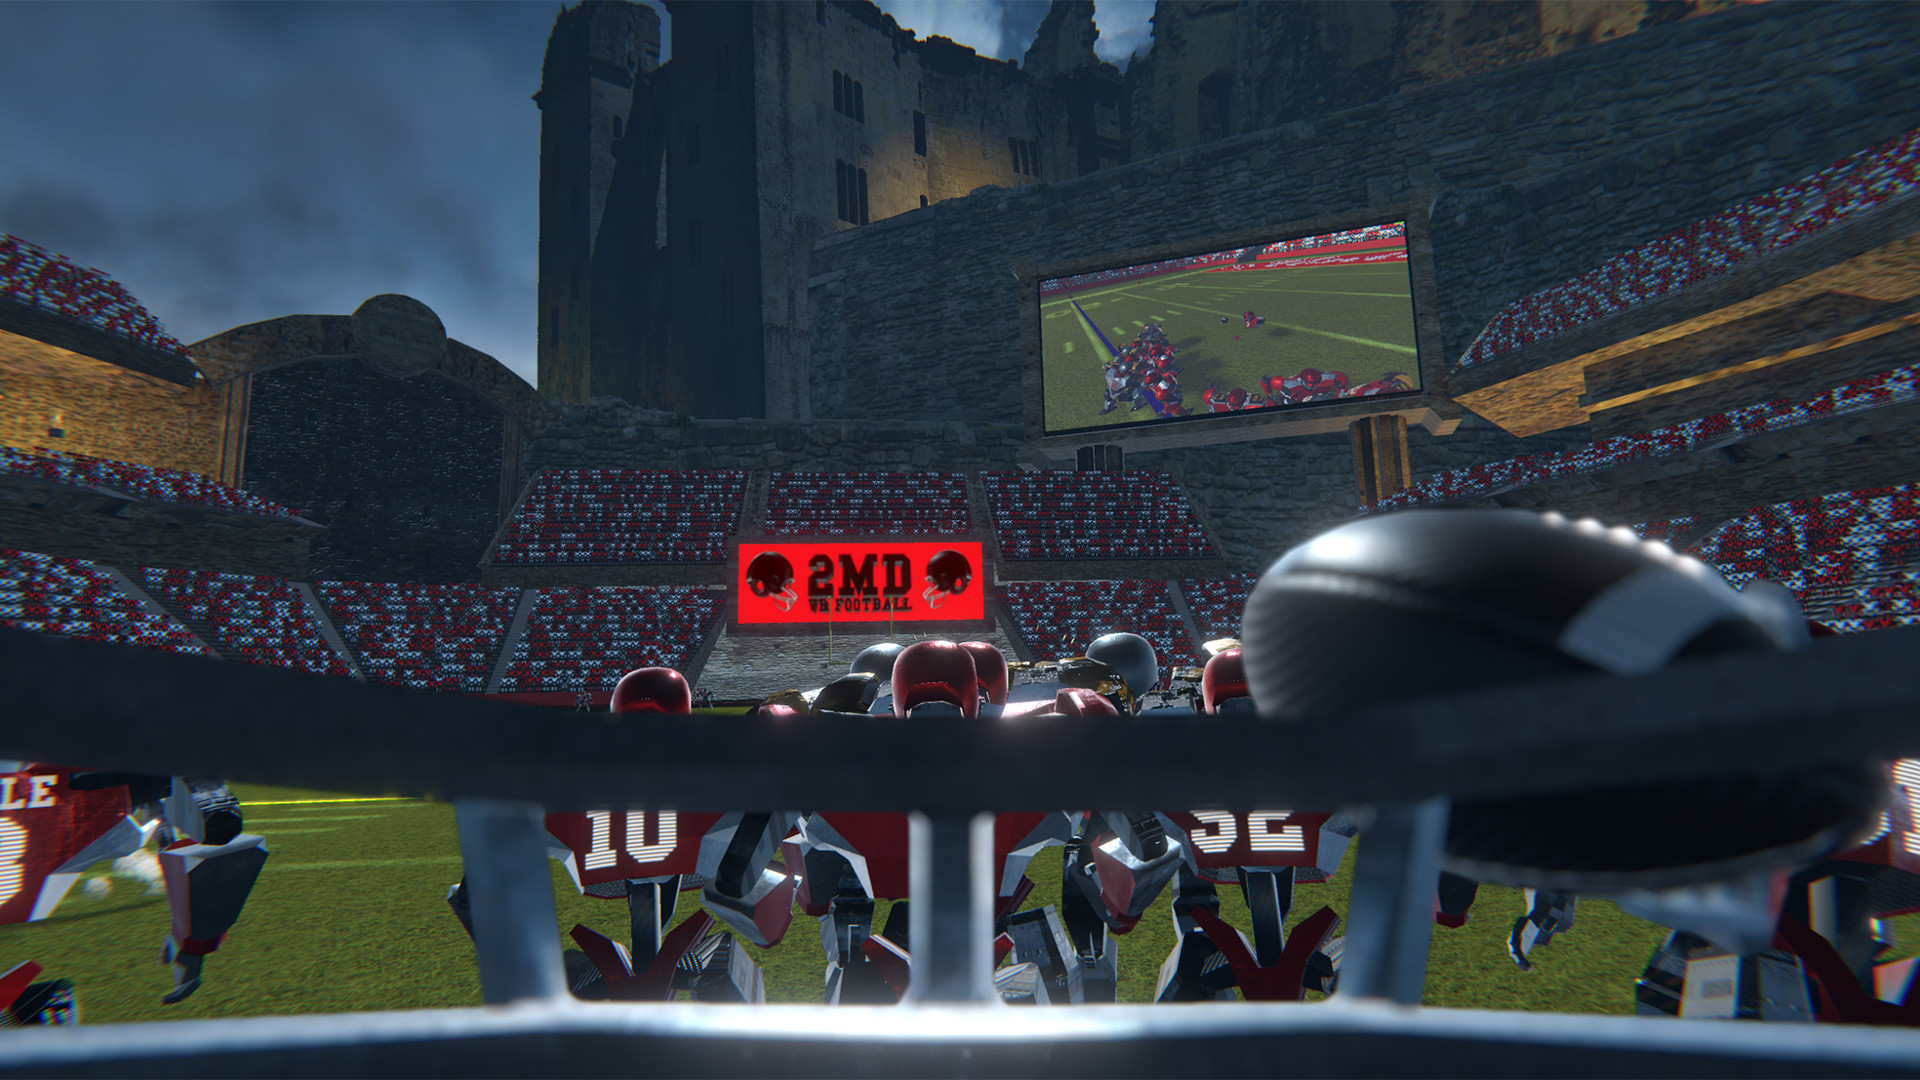 2MD: VR Football Evolution Free Download